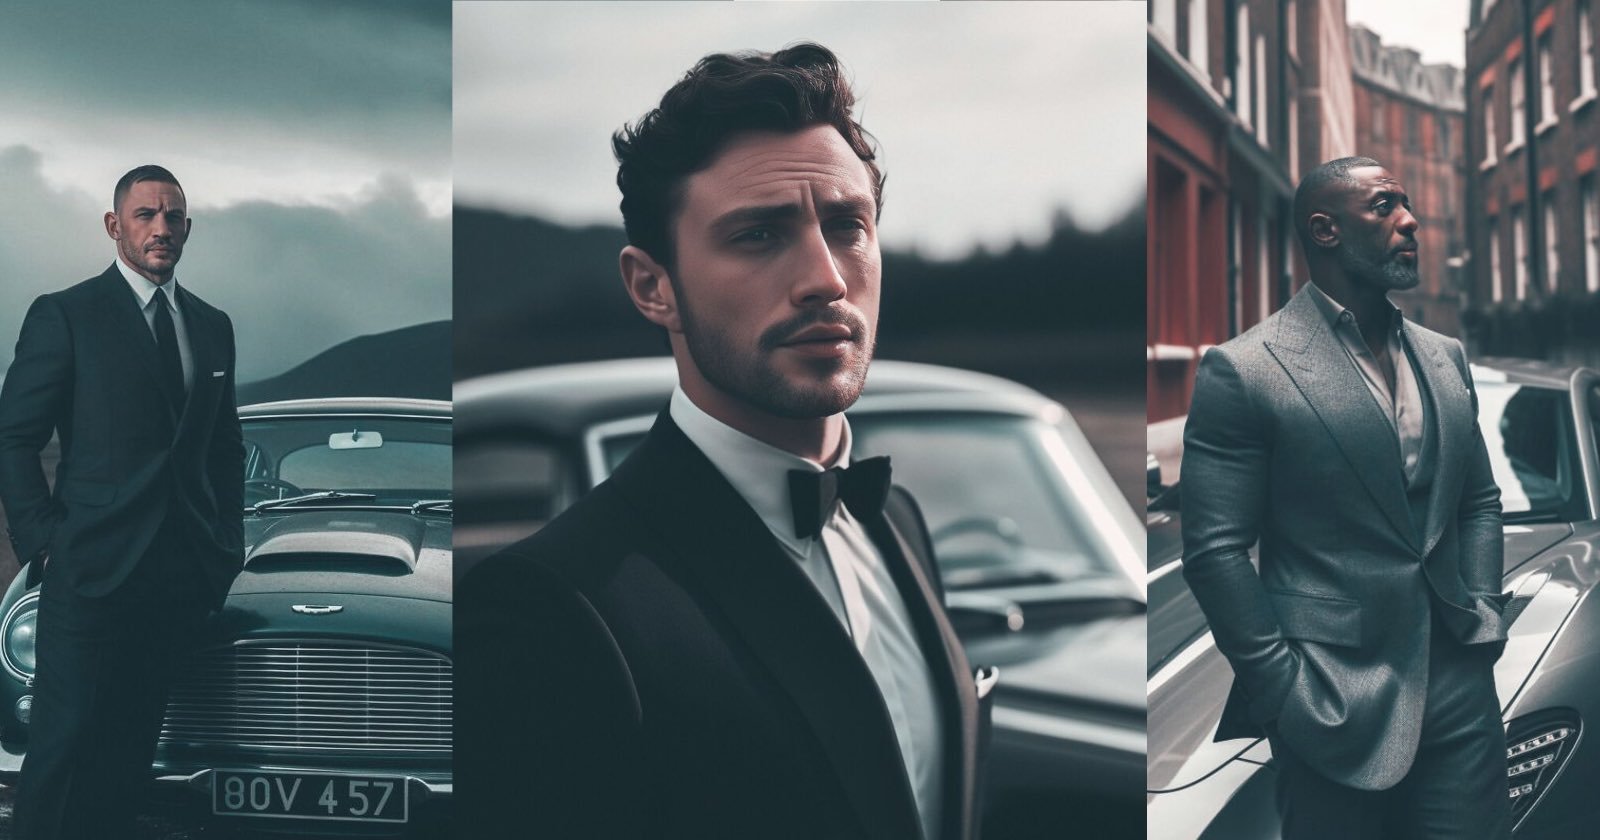 Photographer Uses AI To Imagine Actors as The Next James Bond